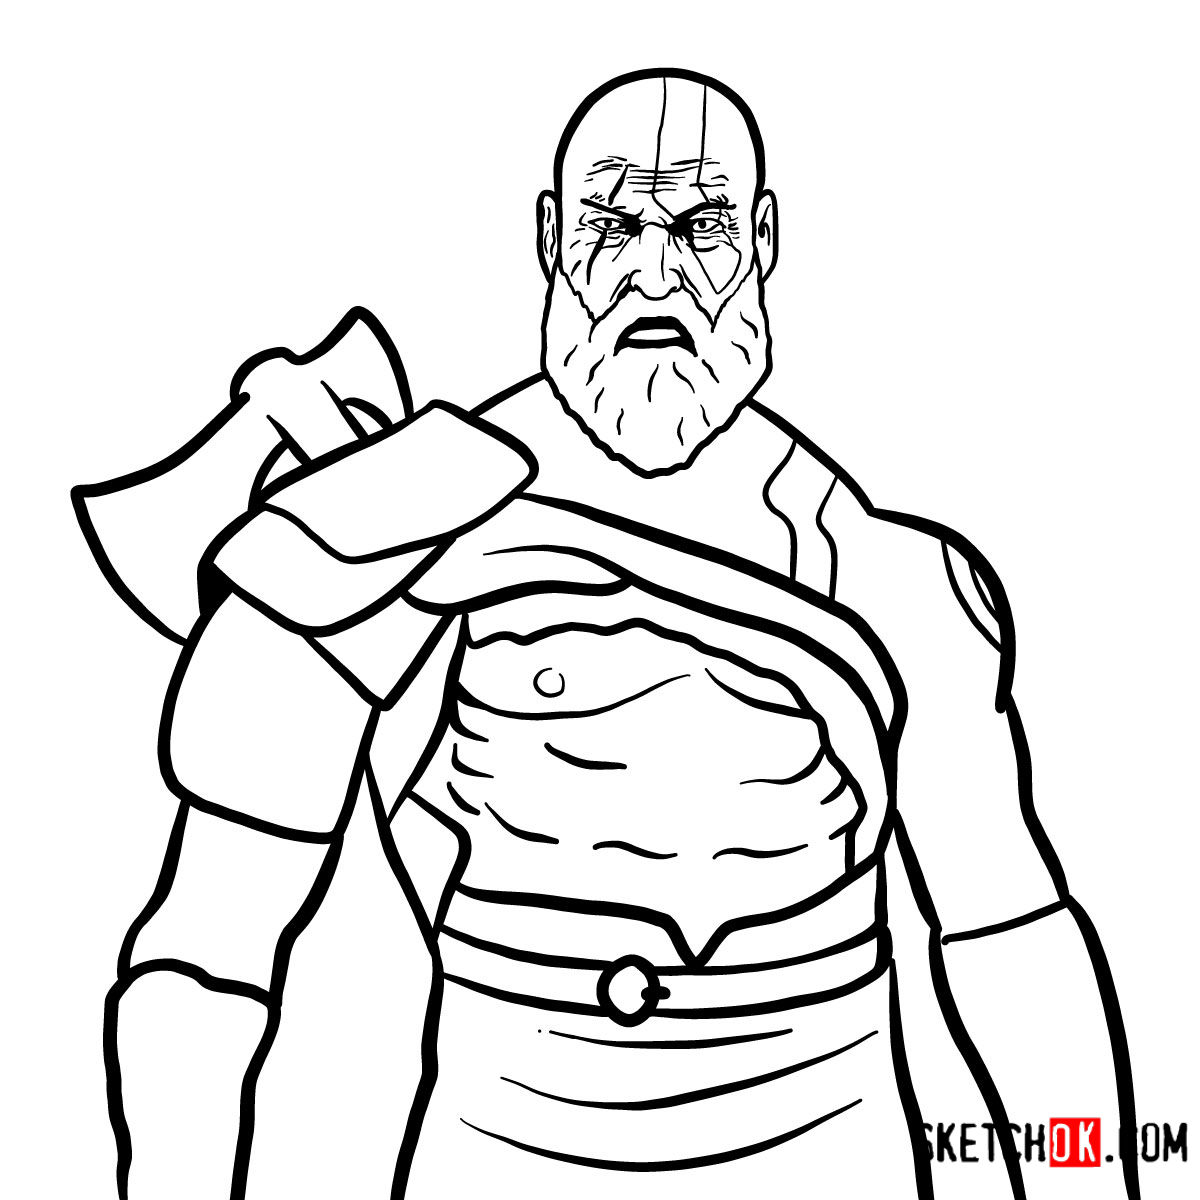 How to draw Kratos | God of War